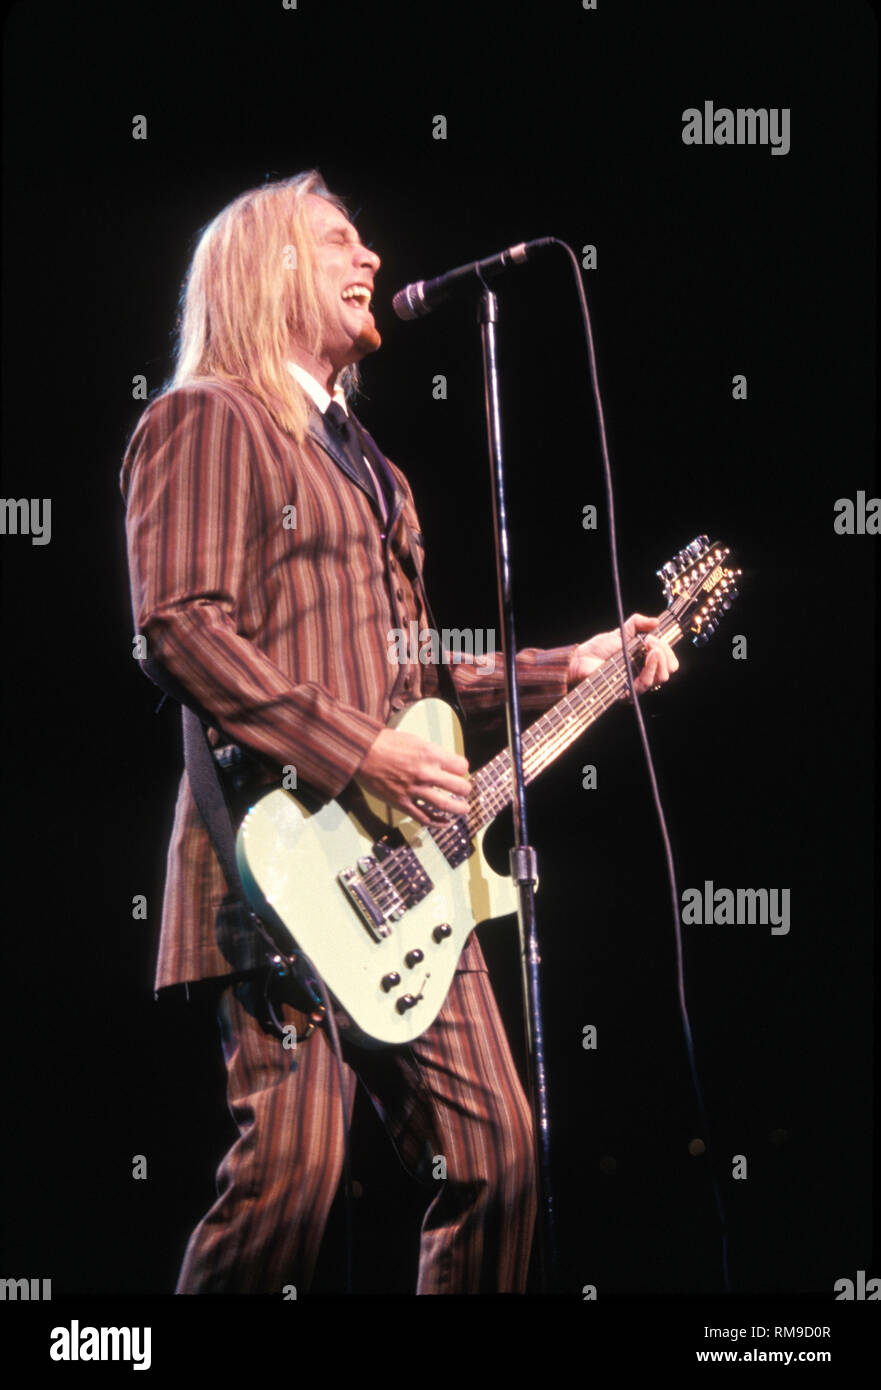 Cheap Trick guitarist Robin Zander is shown peforming "live" in concert